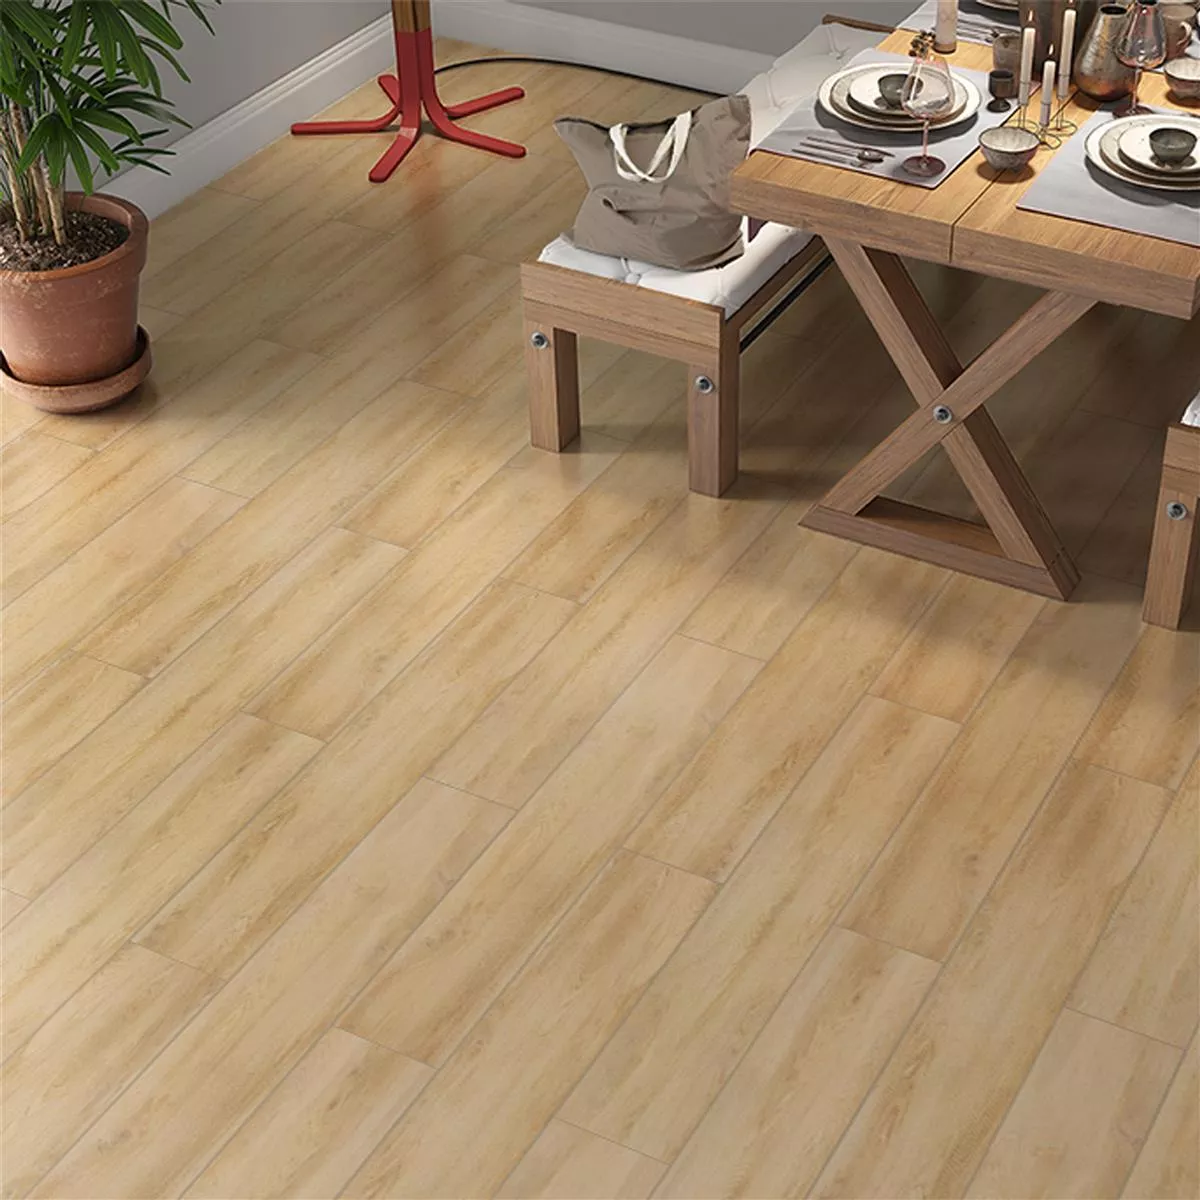 Sample Floor Tiles Wood Optic Darlington Beige 20x120cm